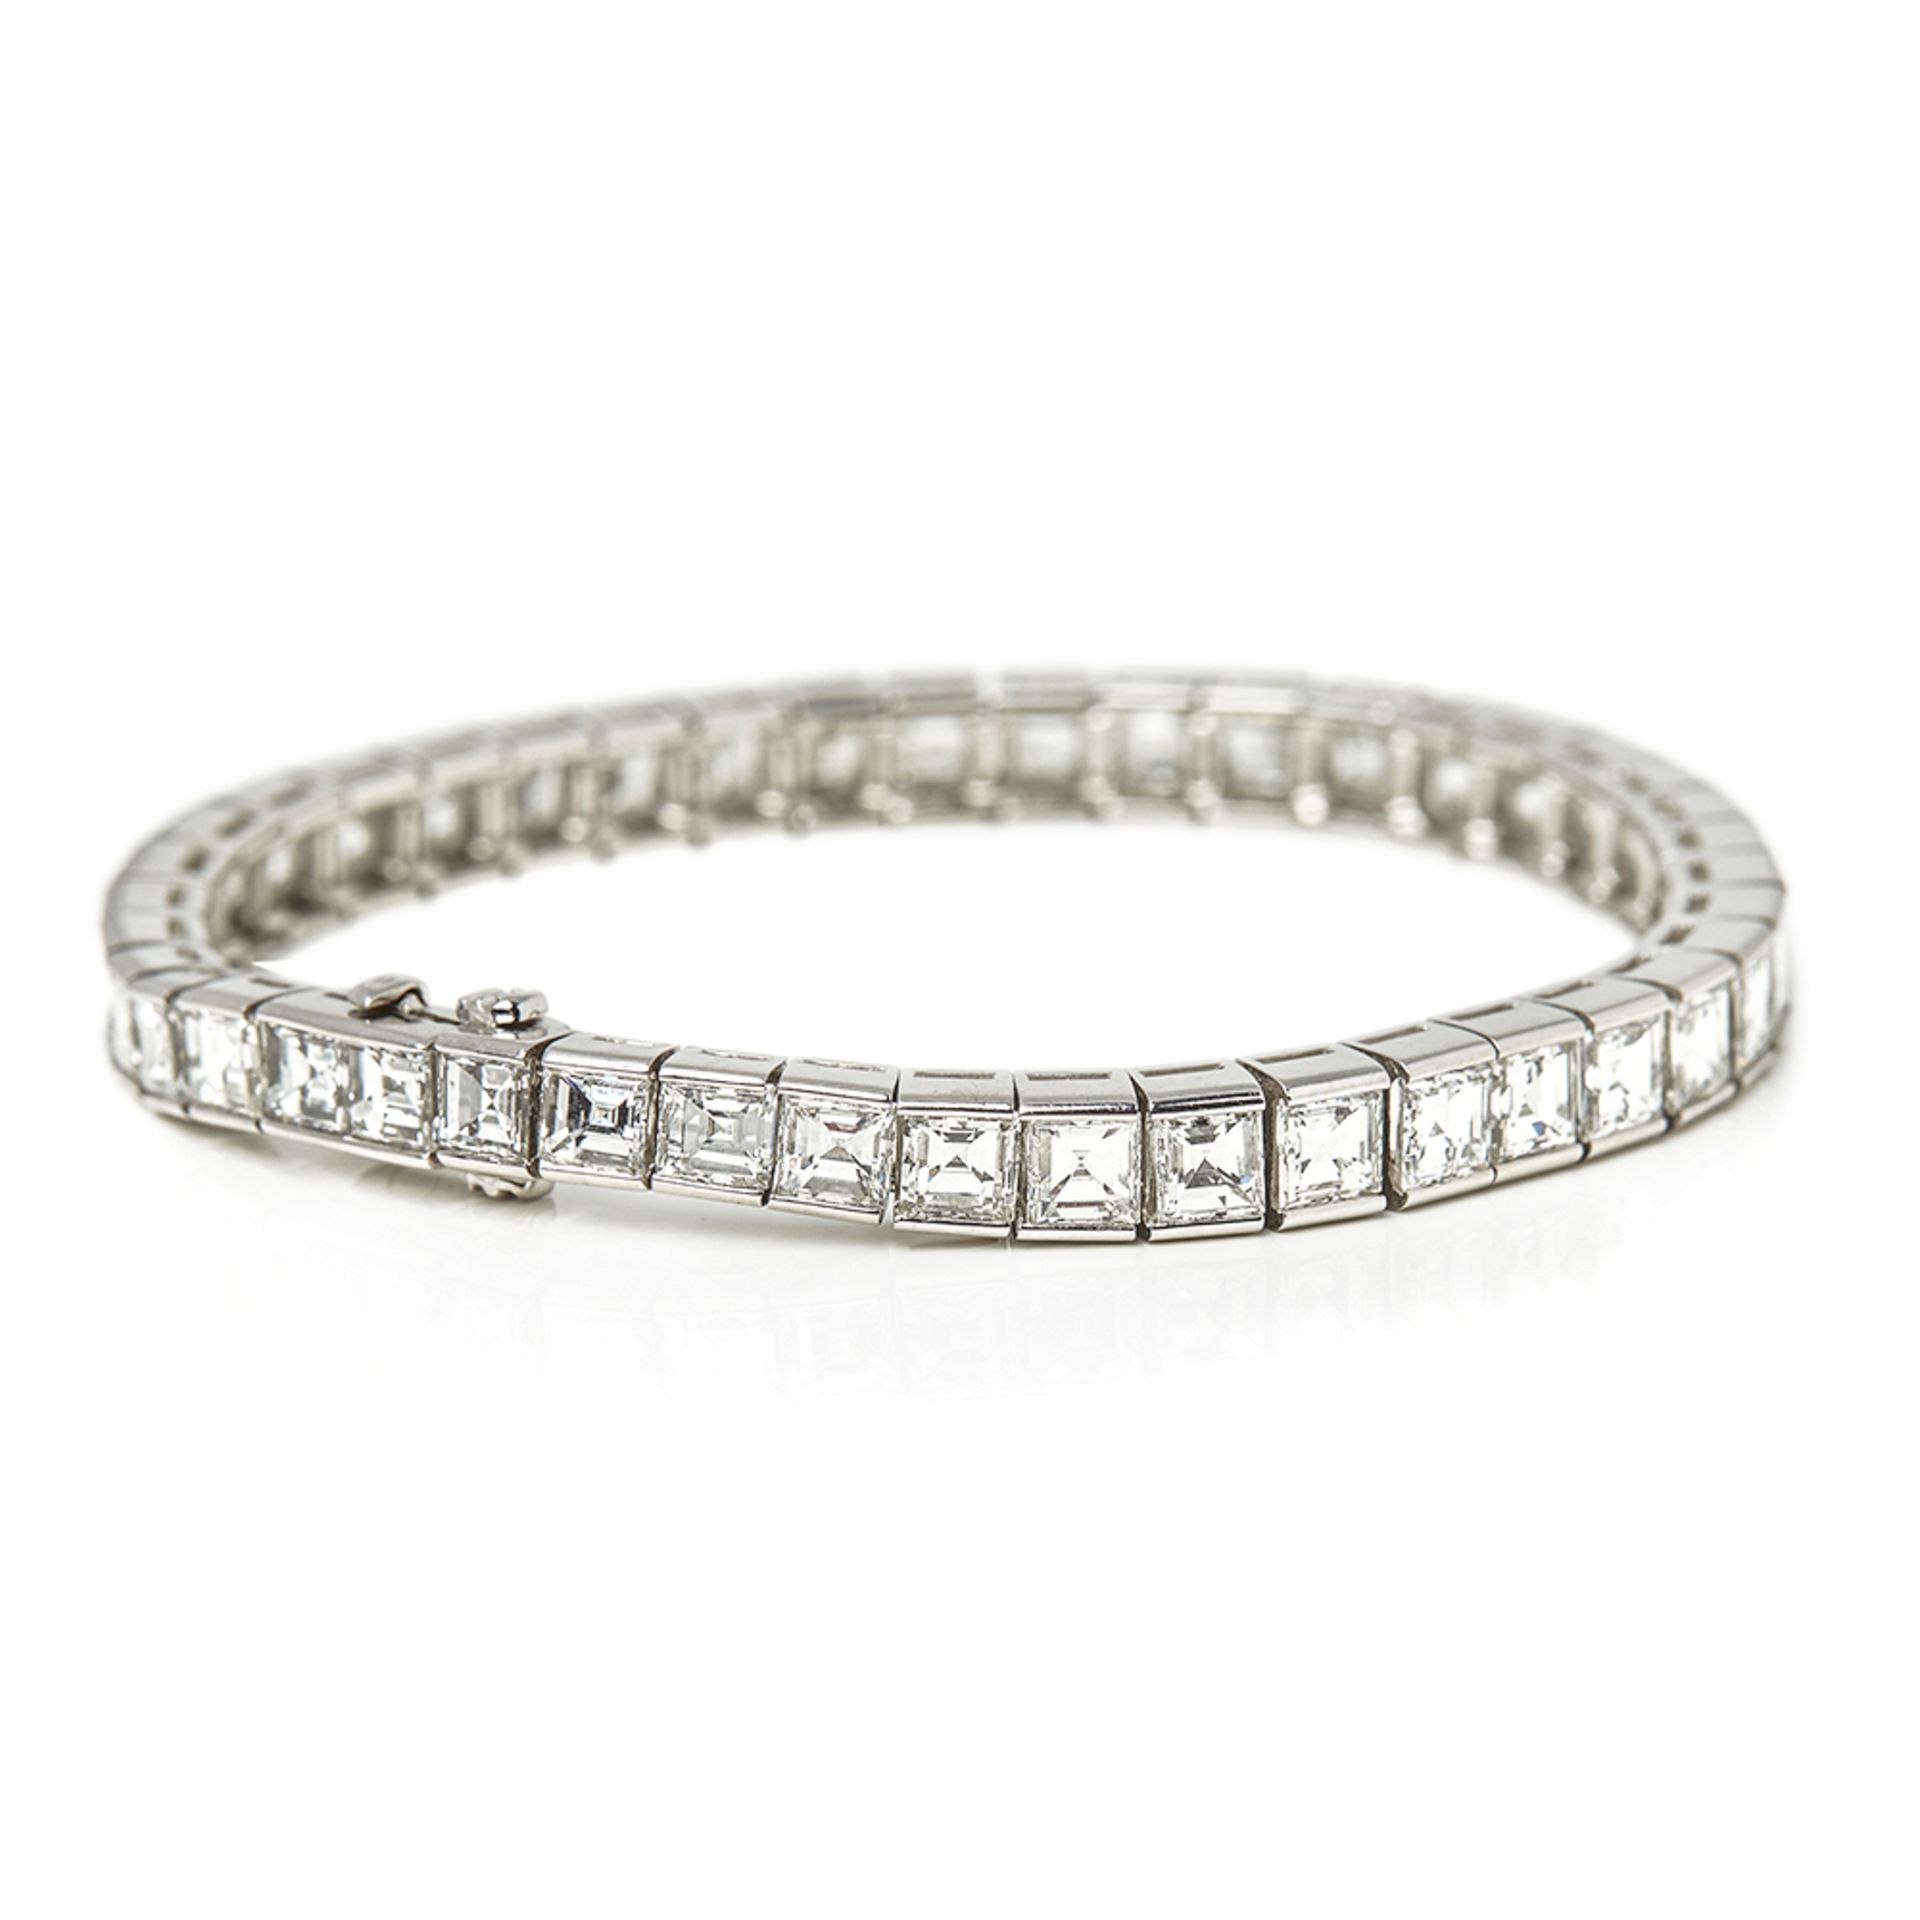 Cartier Platinum Diamond Tennis Bracelet - Image 2 of 12